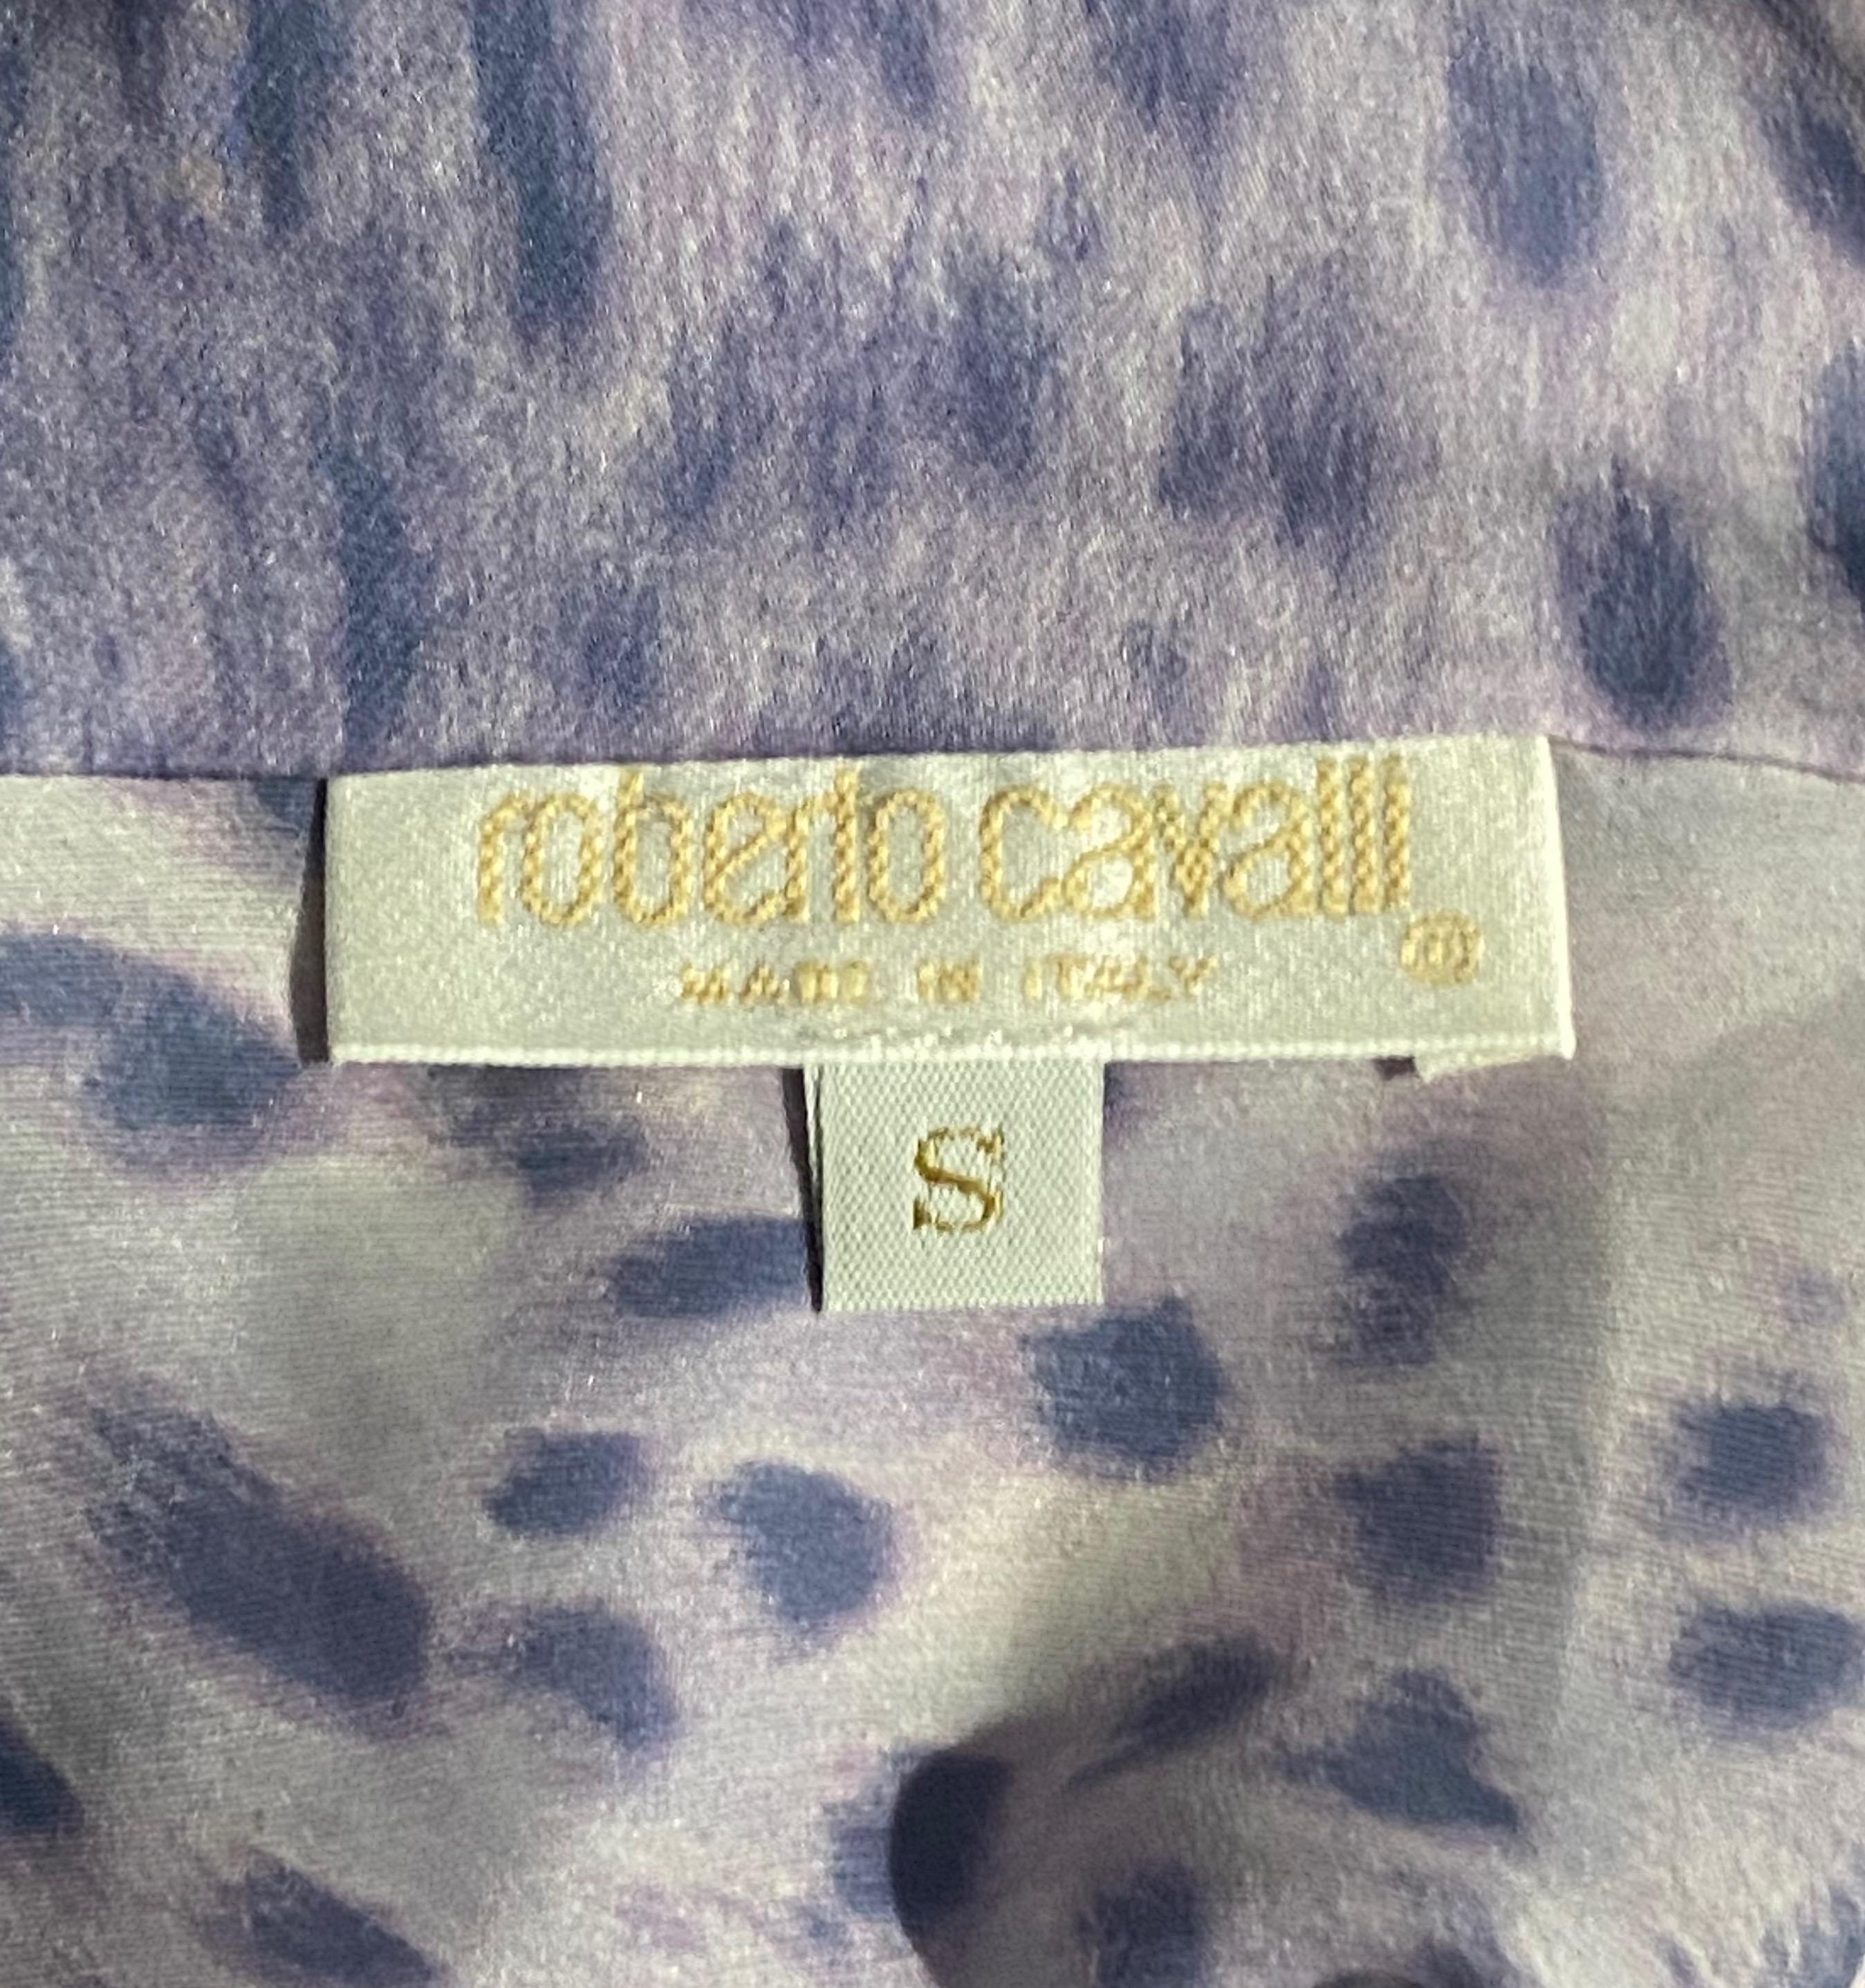 Women's Roberto Cavalli S/S 2000 lilac cheetah silk top